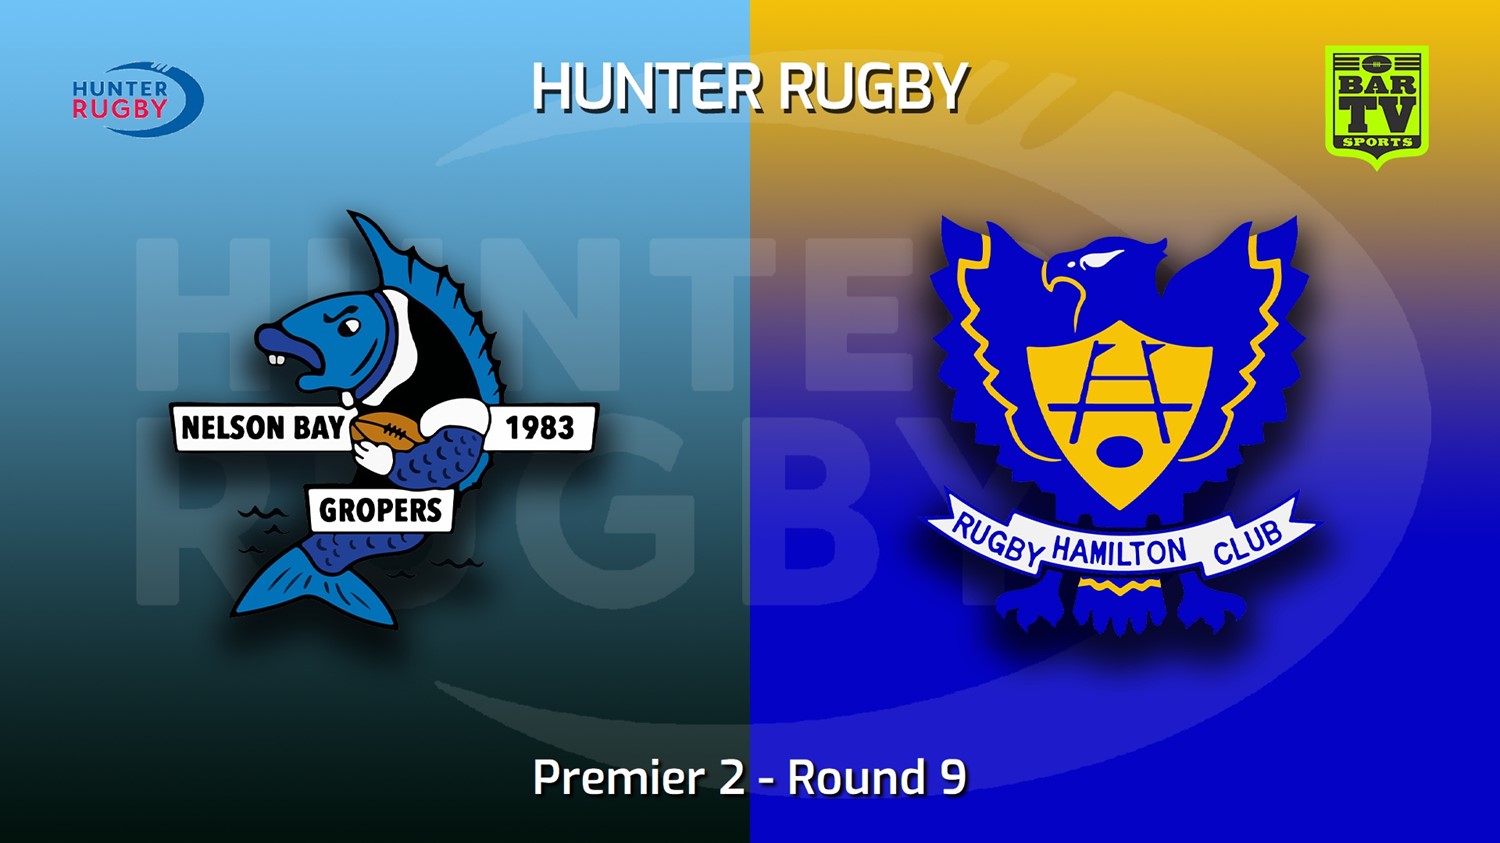 220625-Hunter Rugby Round 9 - Premier 2 - Nelson Bay Gropers v Hamilton Hawks Slate Image